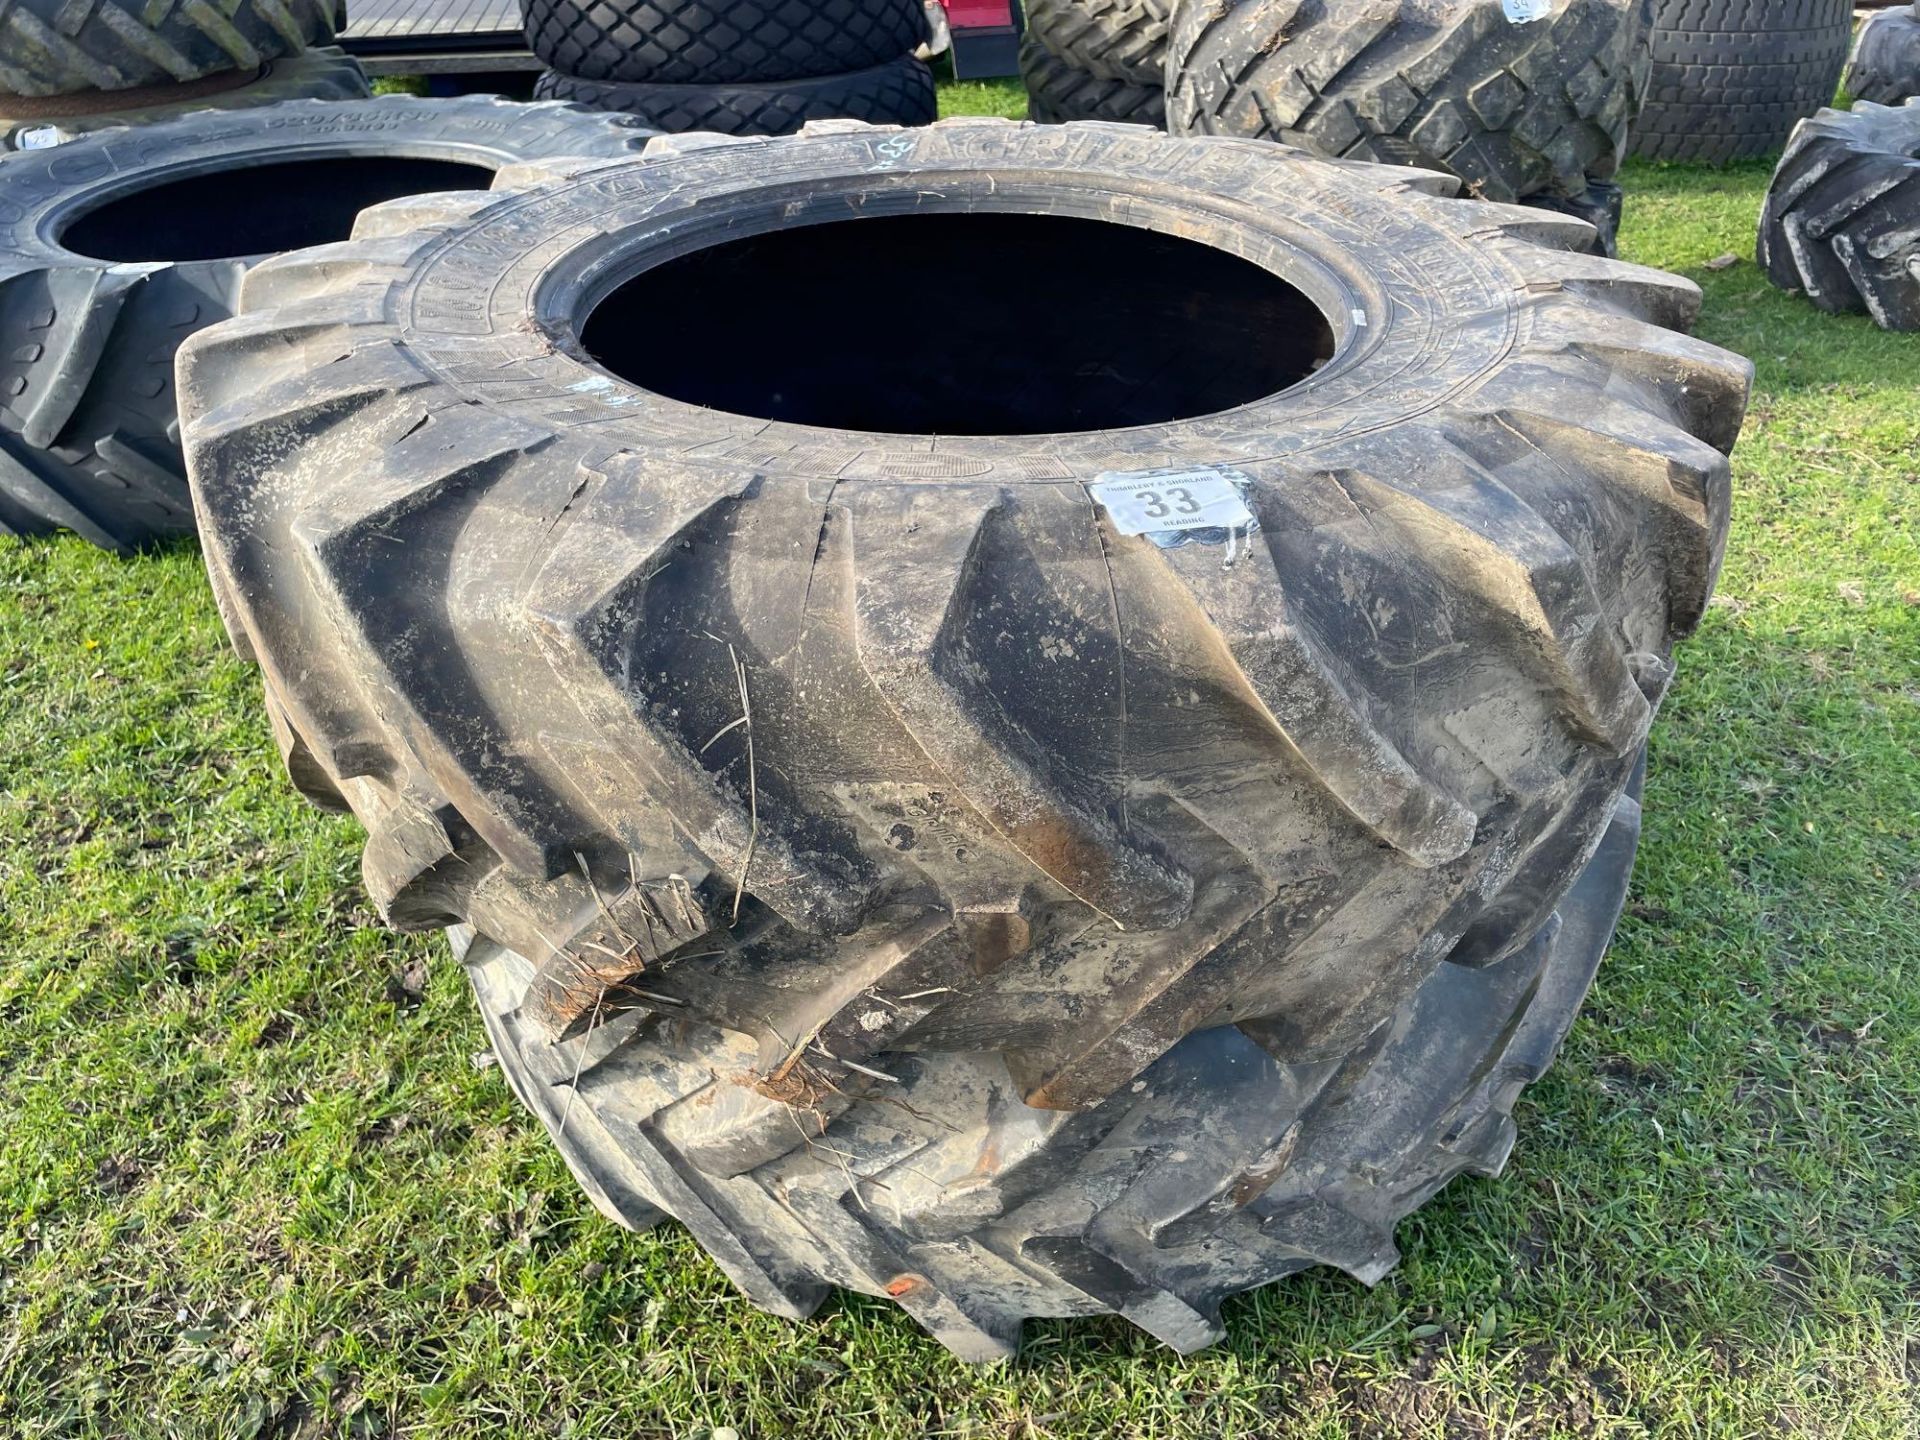 Pr 16.9 R28 Agribib tyres